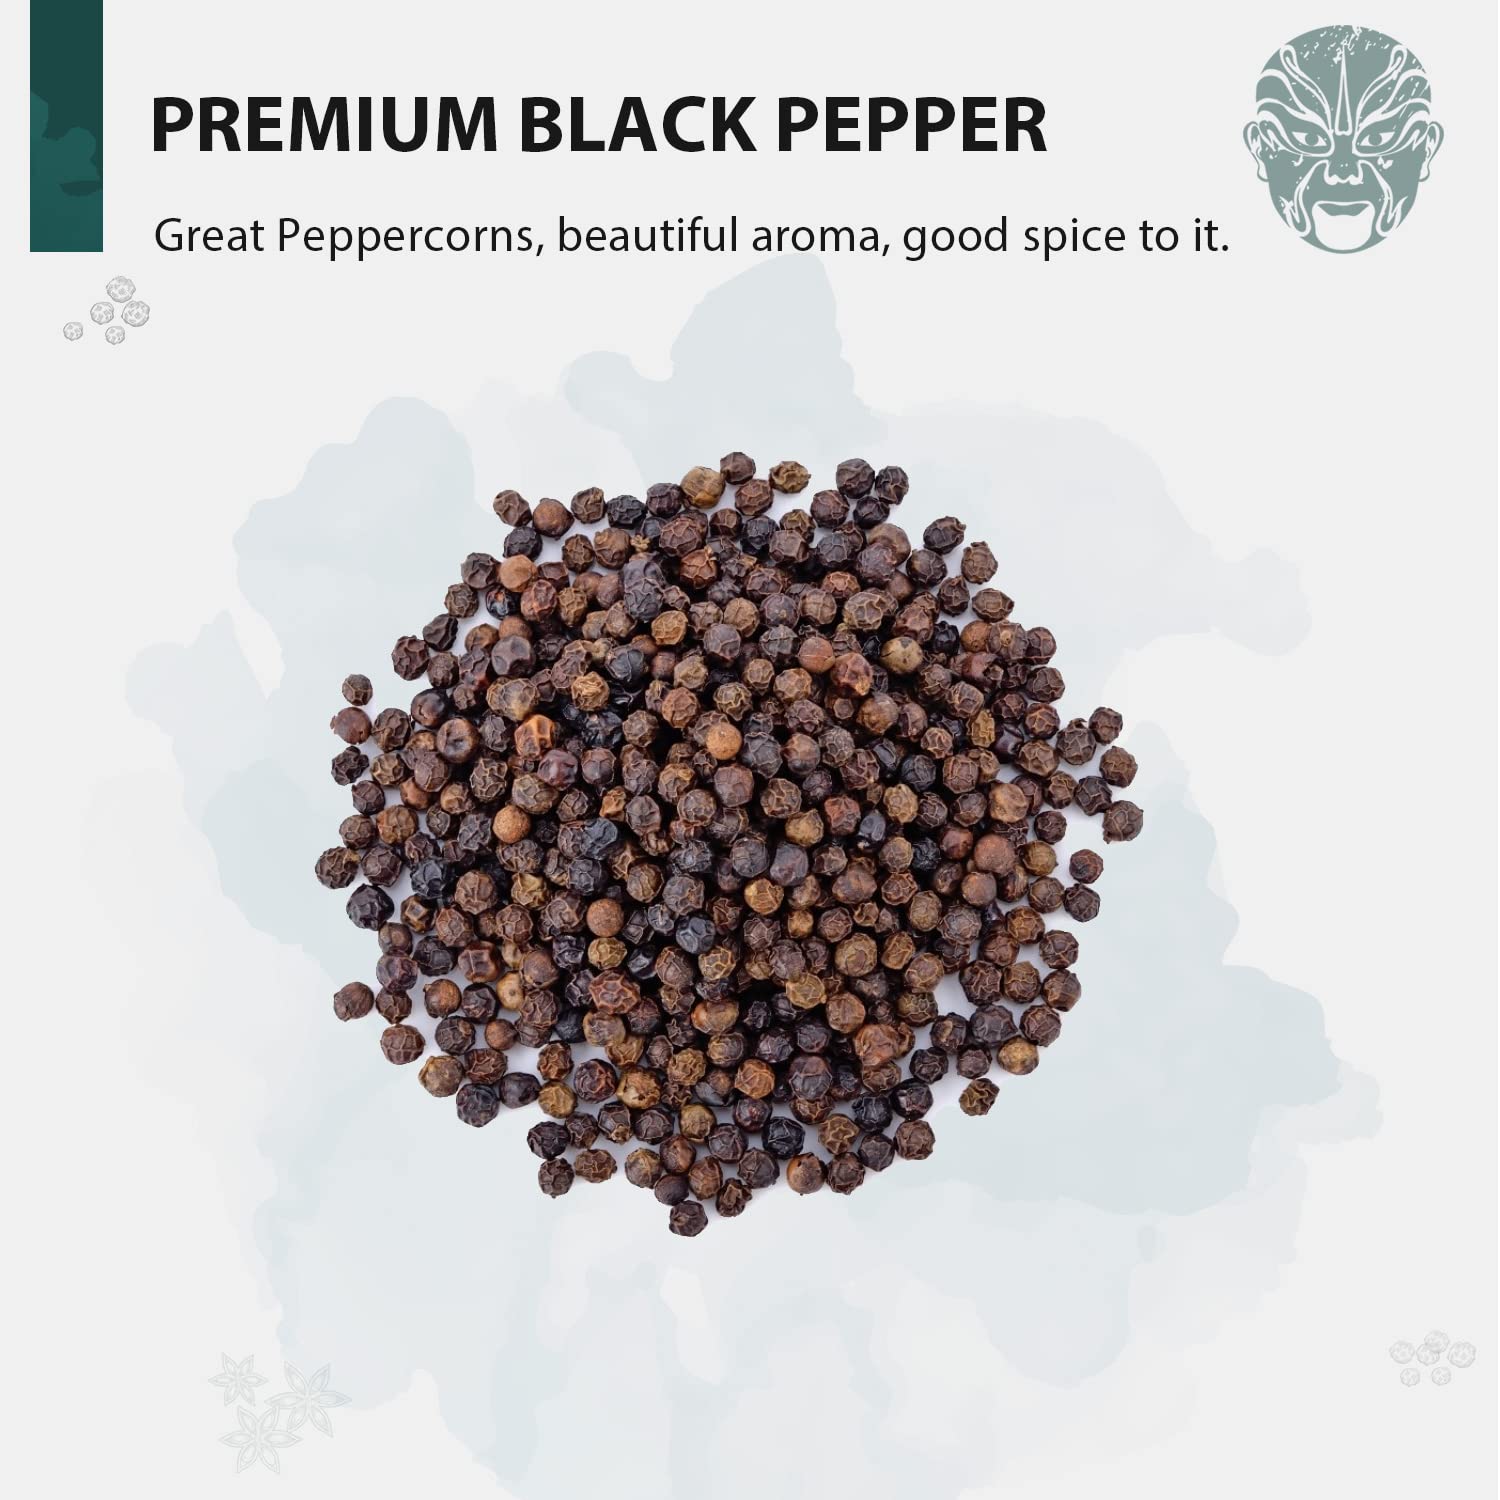 Whole Black Peppercorns Flatpack